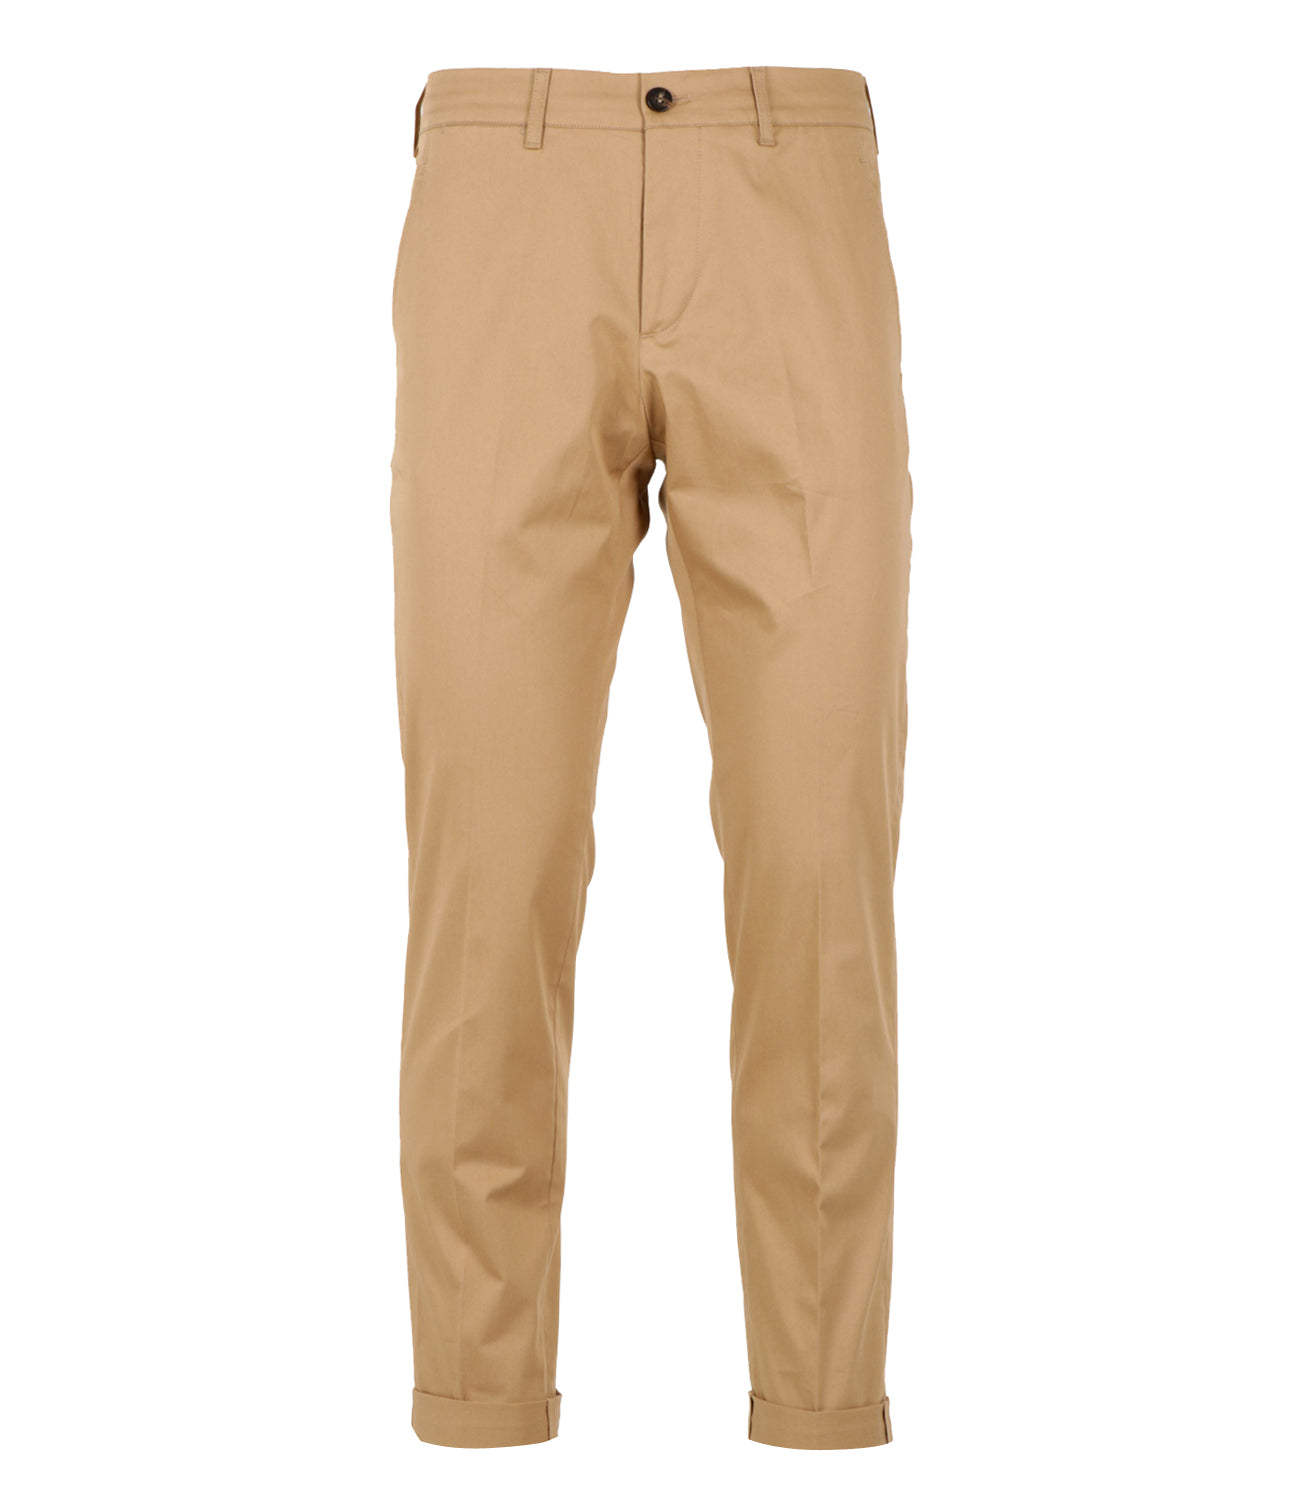 Golden Goose Deluxe Brand | Pantalone Chino Pants Beige